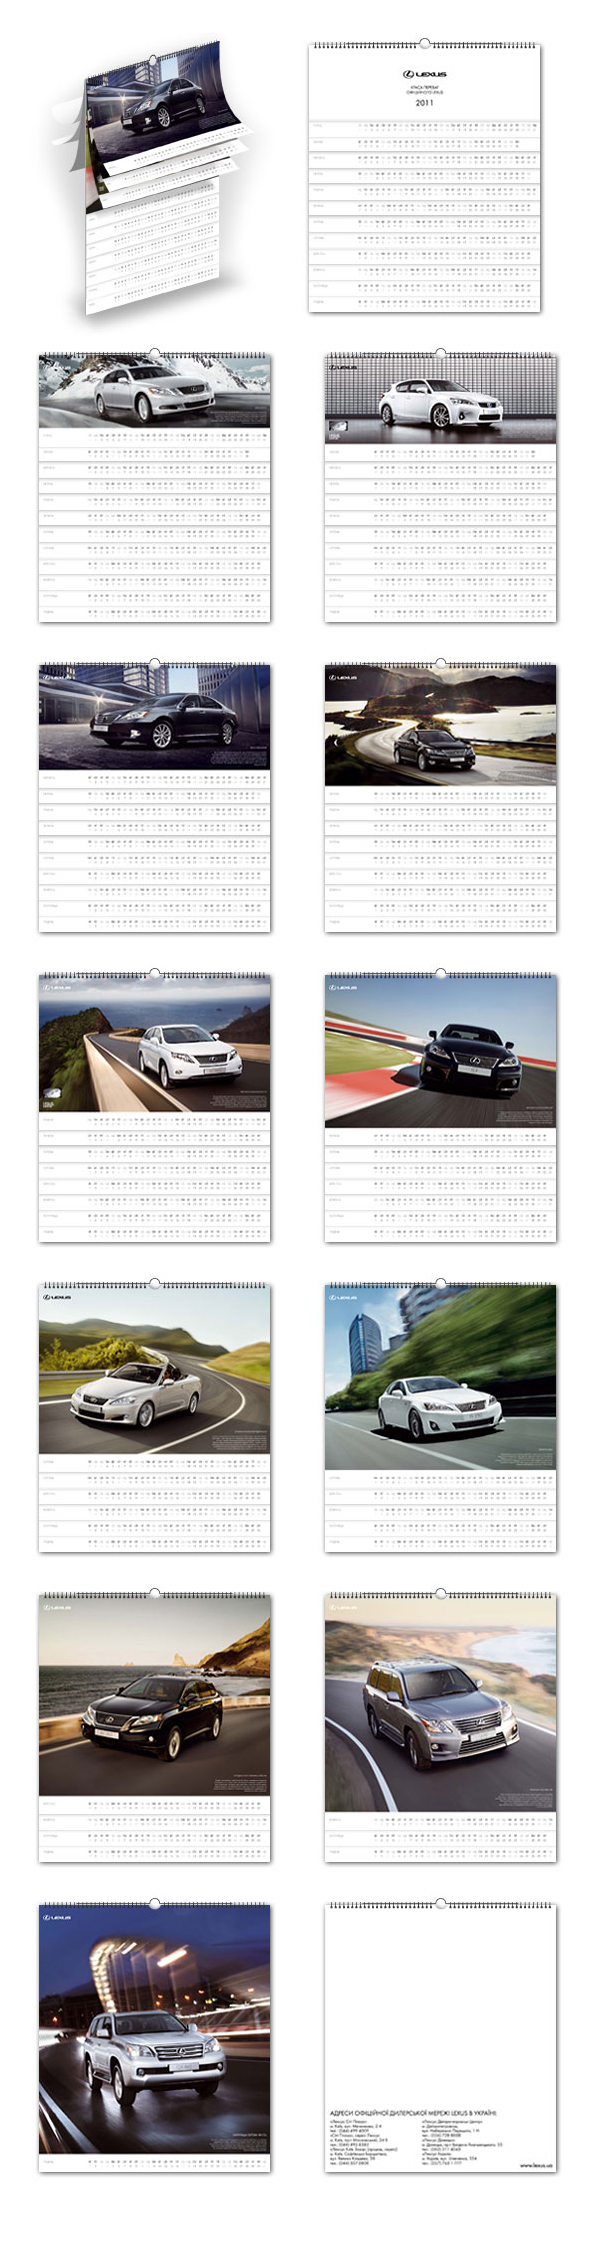 Календарь Lexus 2011